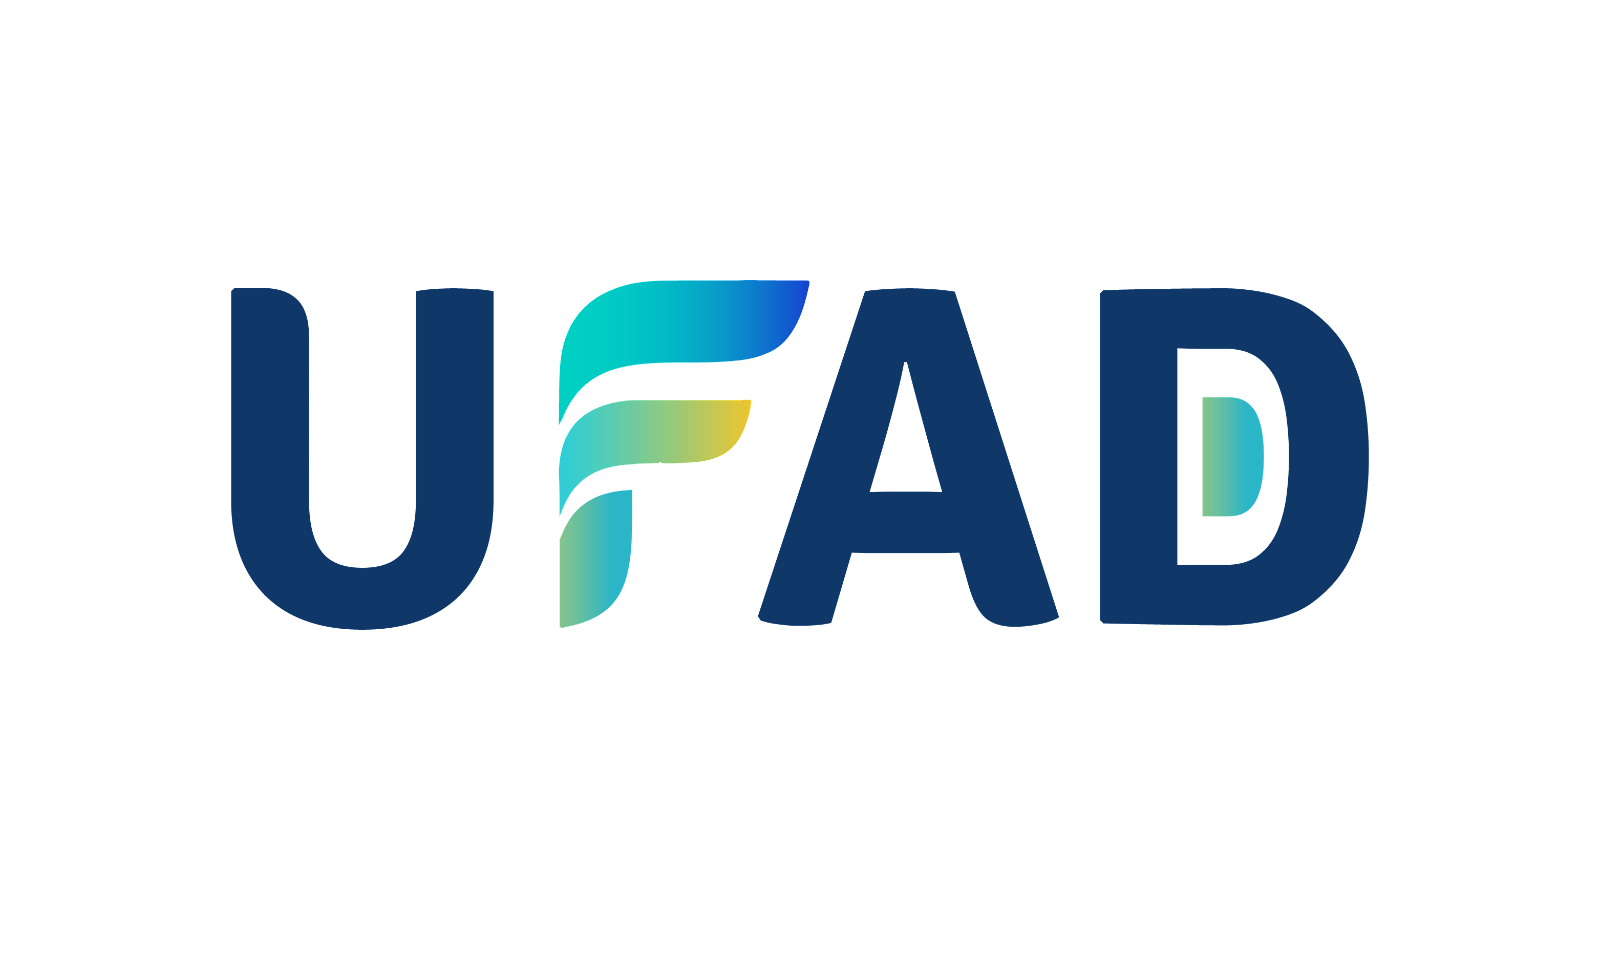 UFAD.com - Creative brandable domain for sale